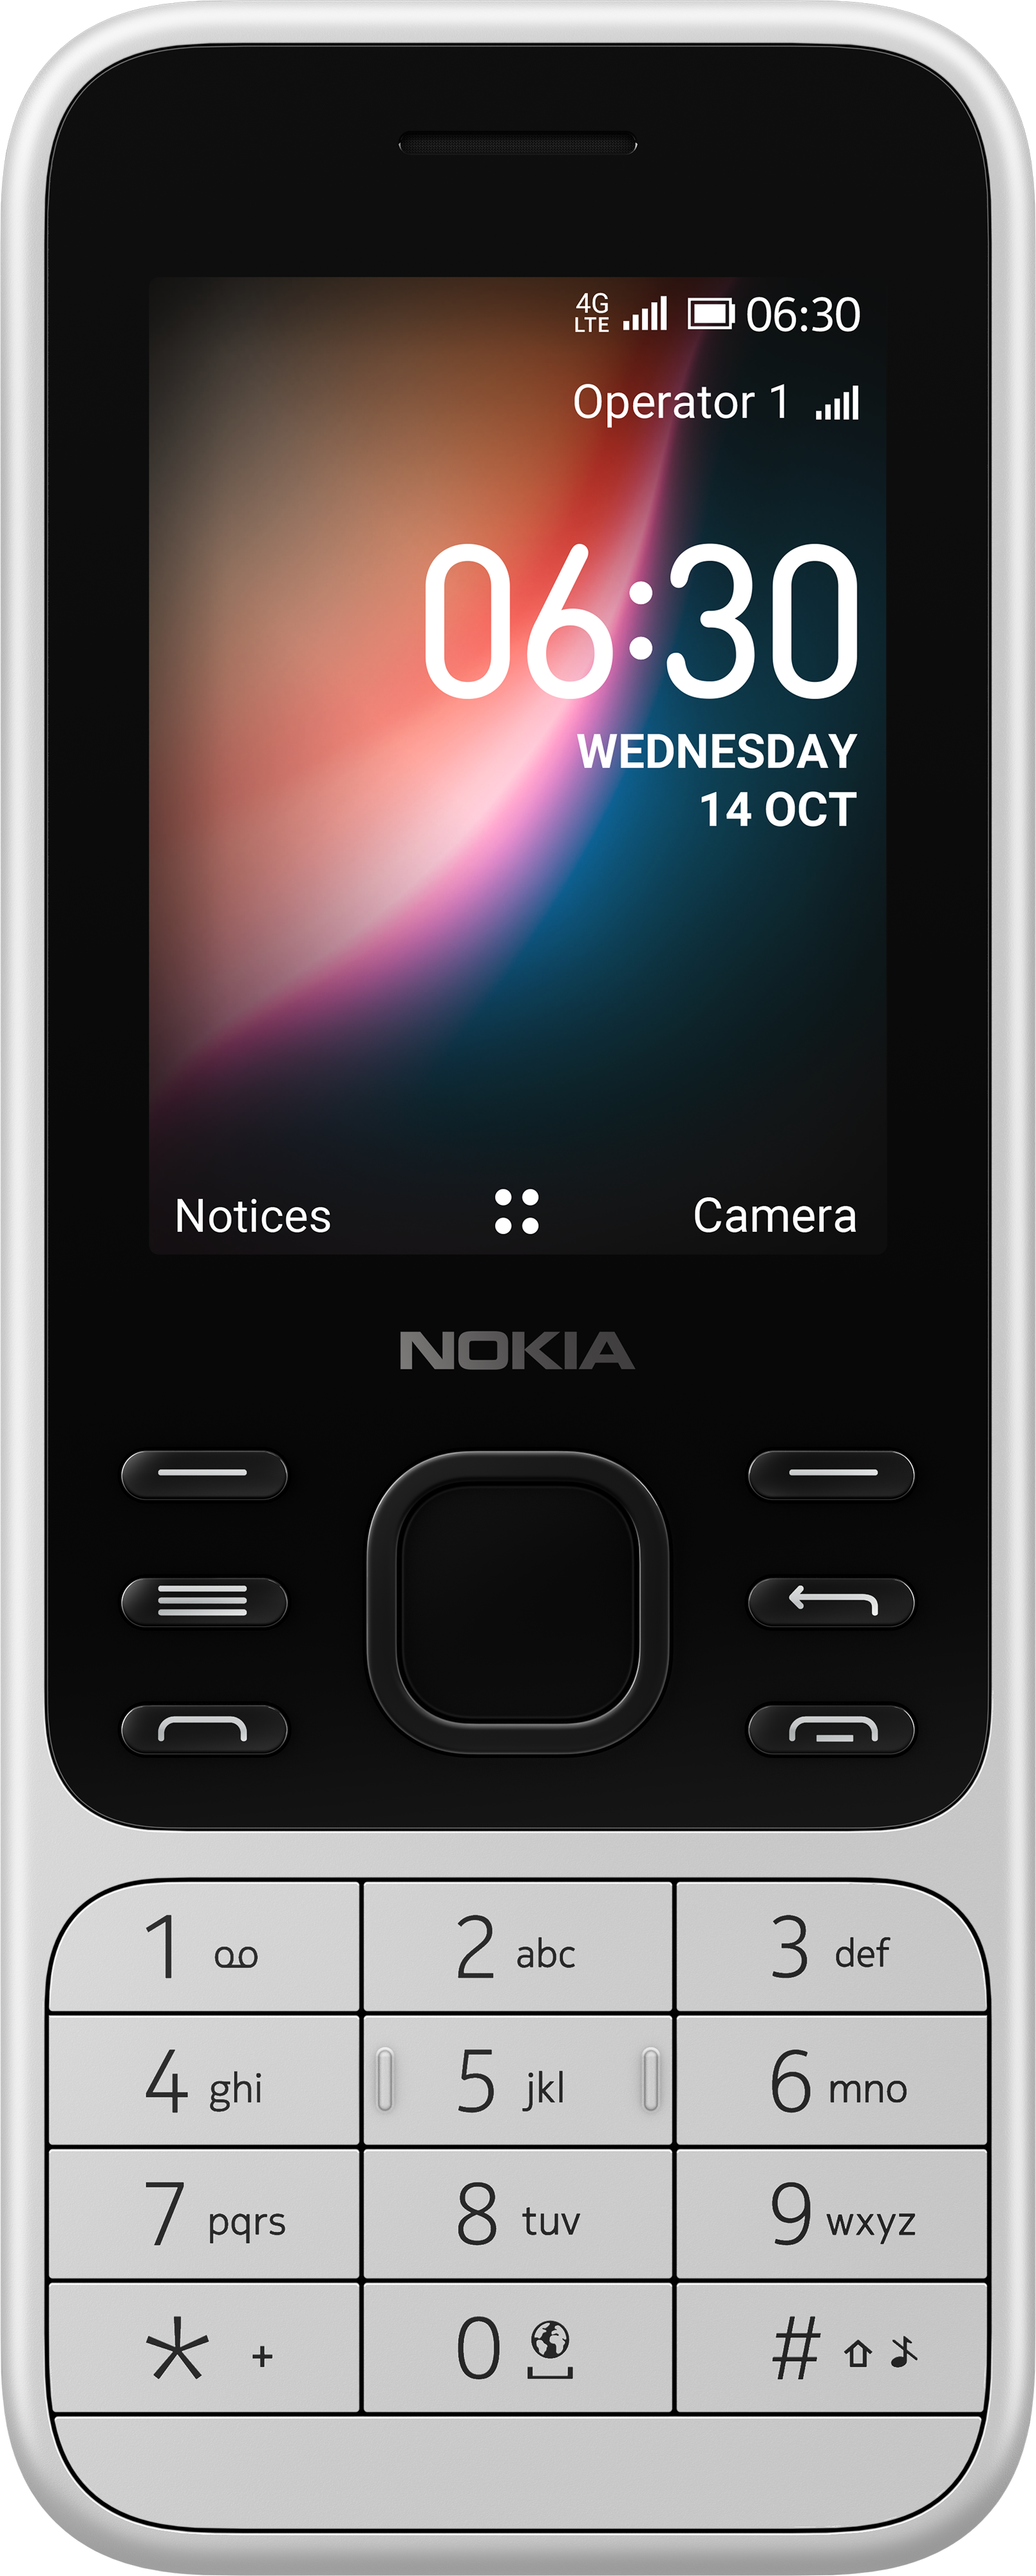 Smartphone NOKIA 6300 2.4 4GB Cyan - Oechsle